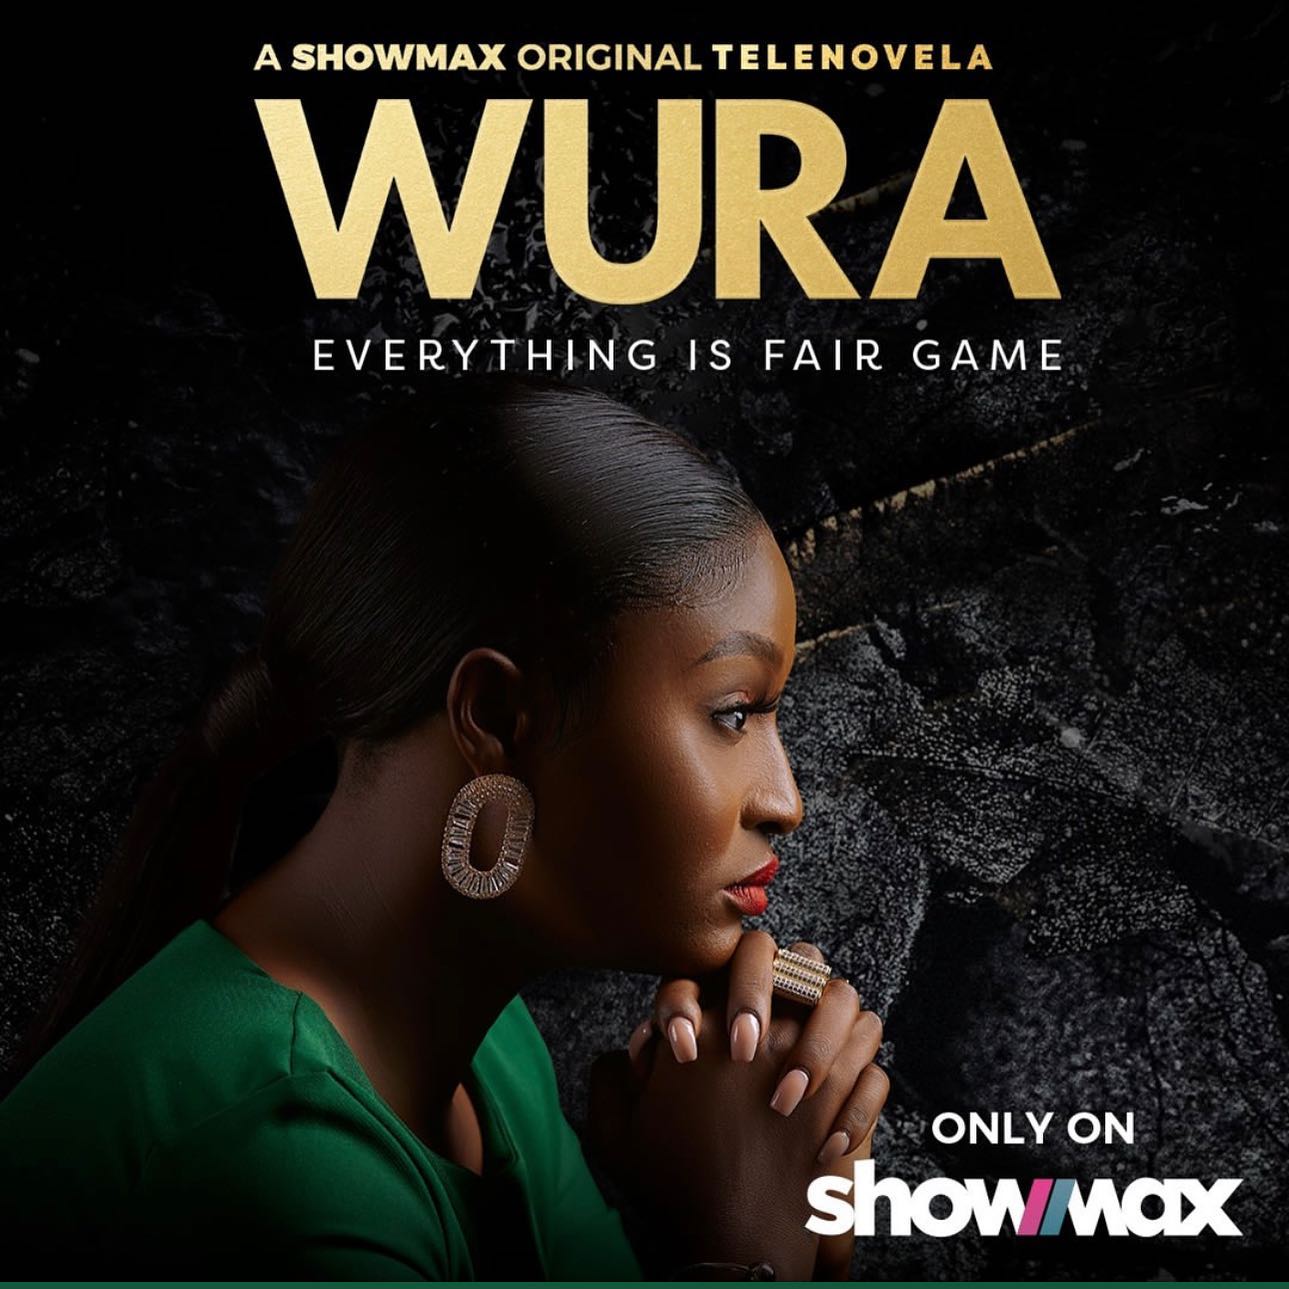 Download Movie: Wura Season 1 (Episode 53-56 Added)